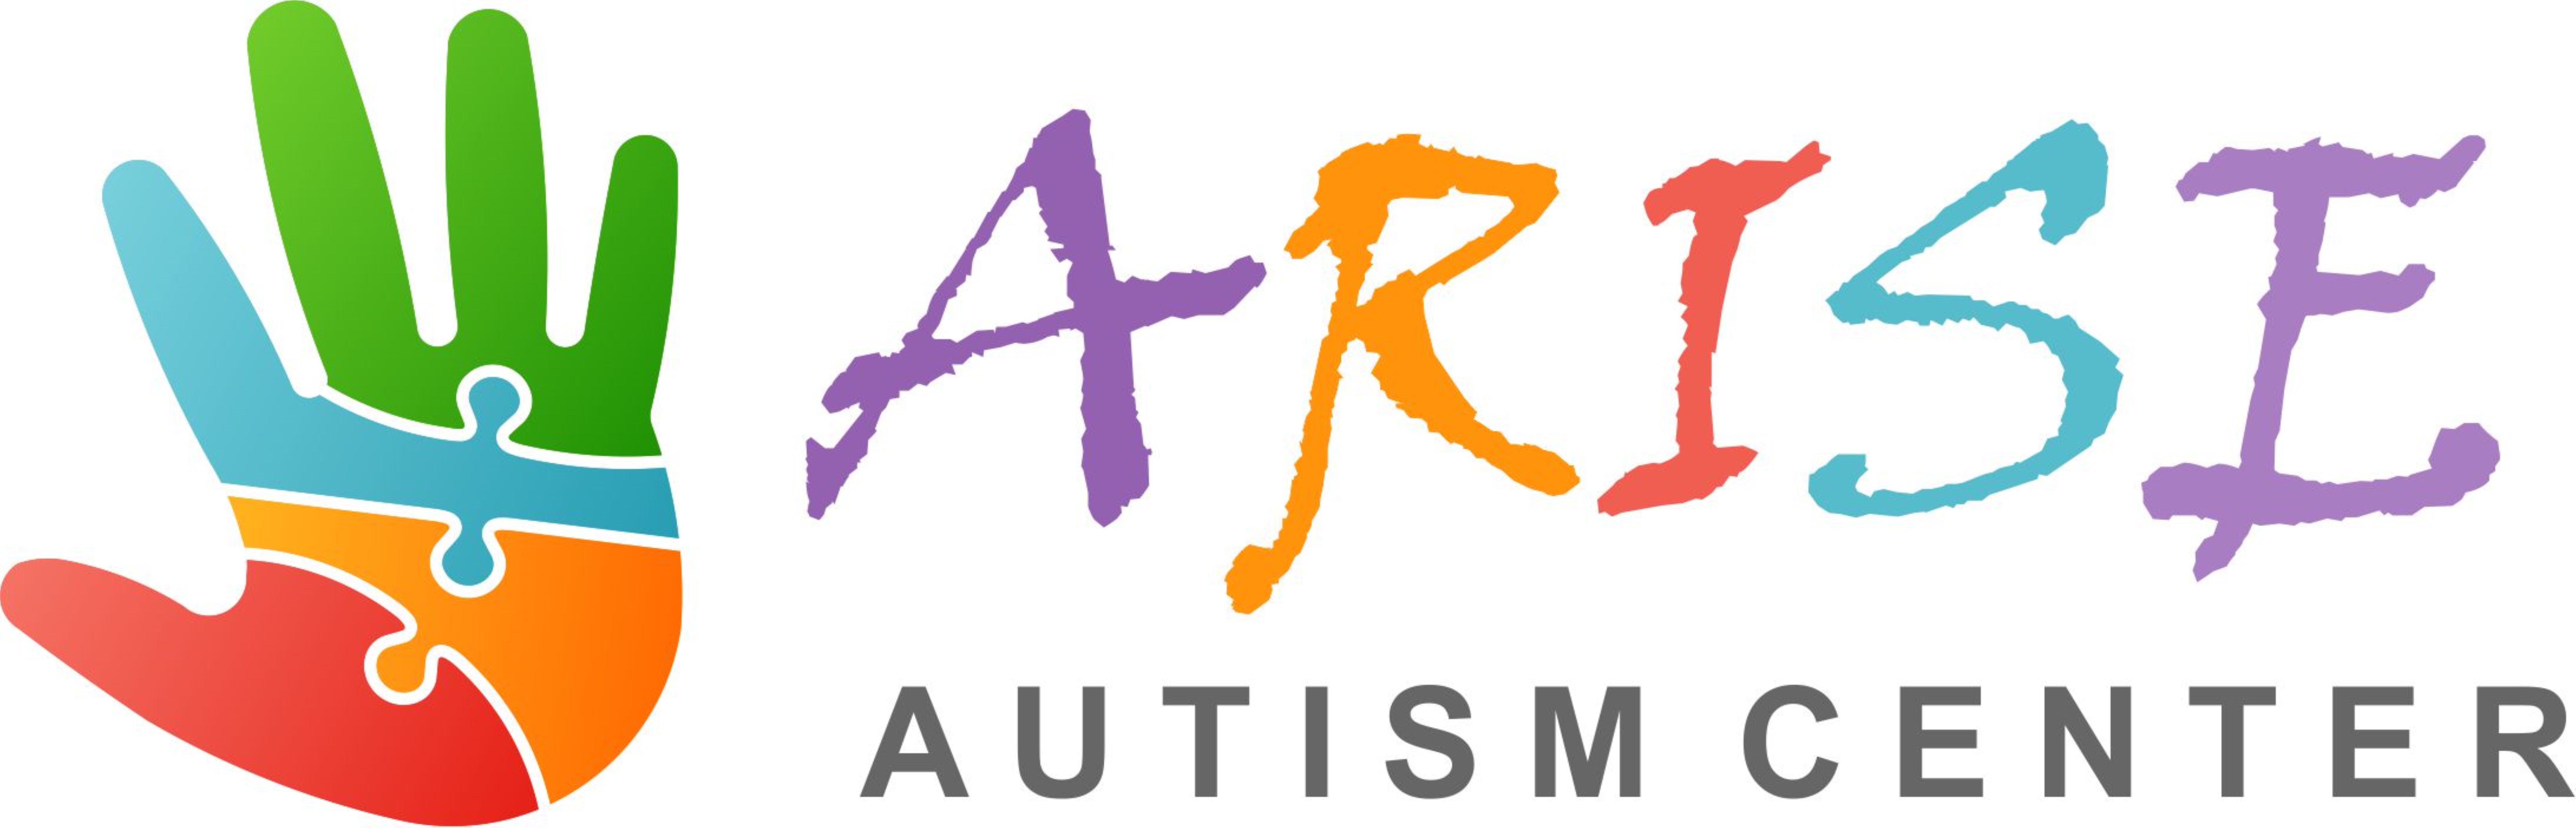 [Arise Autism Center] *Service Provider Sponsors*